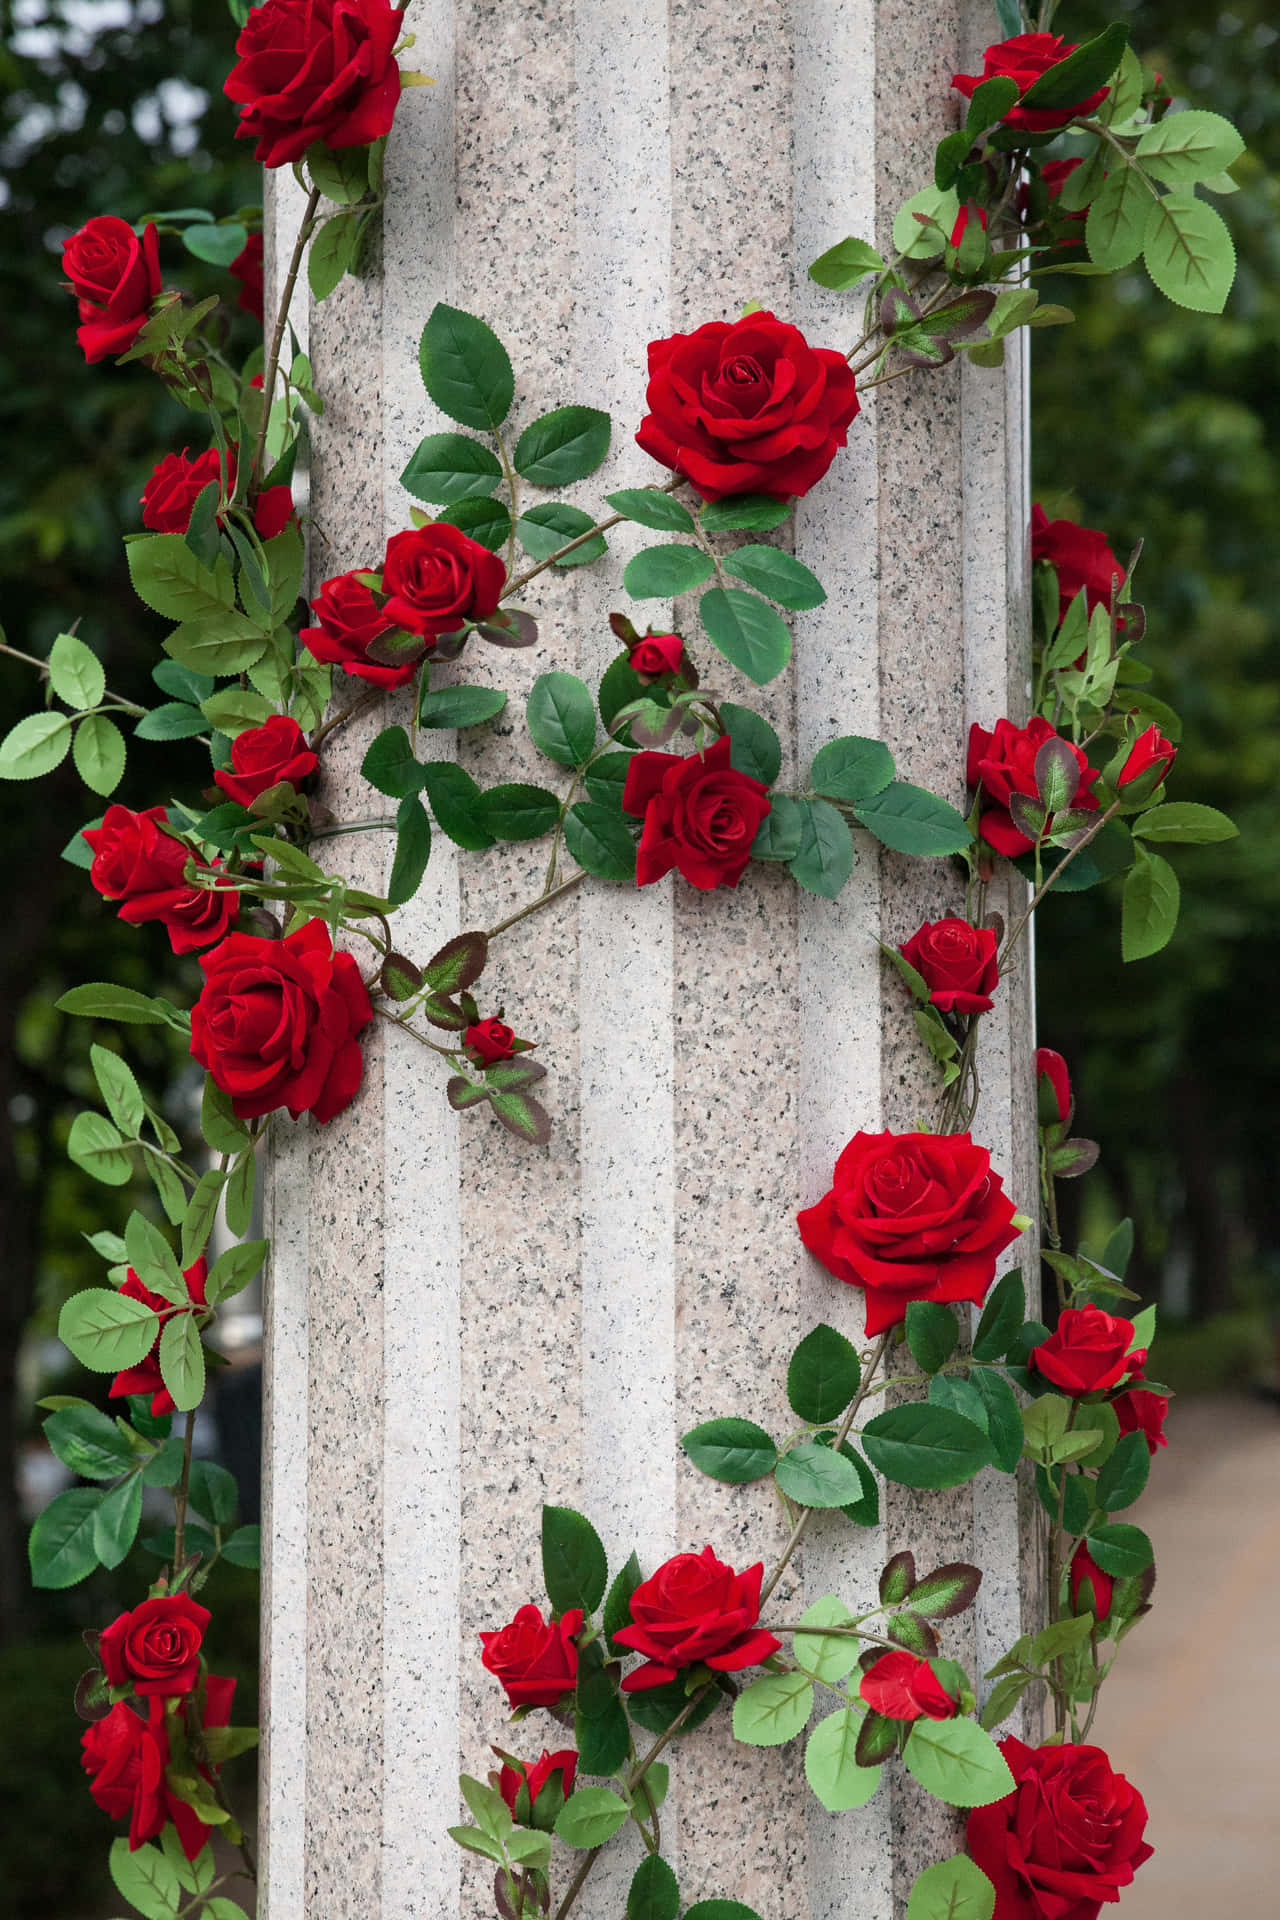 “A vibrant symbol of love, the Cute Rose.” Wallpaper